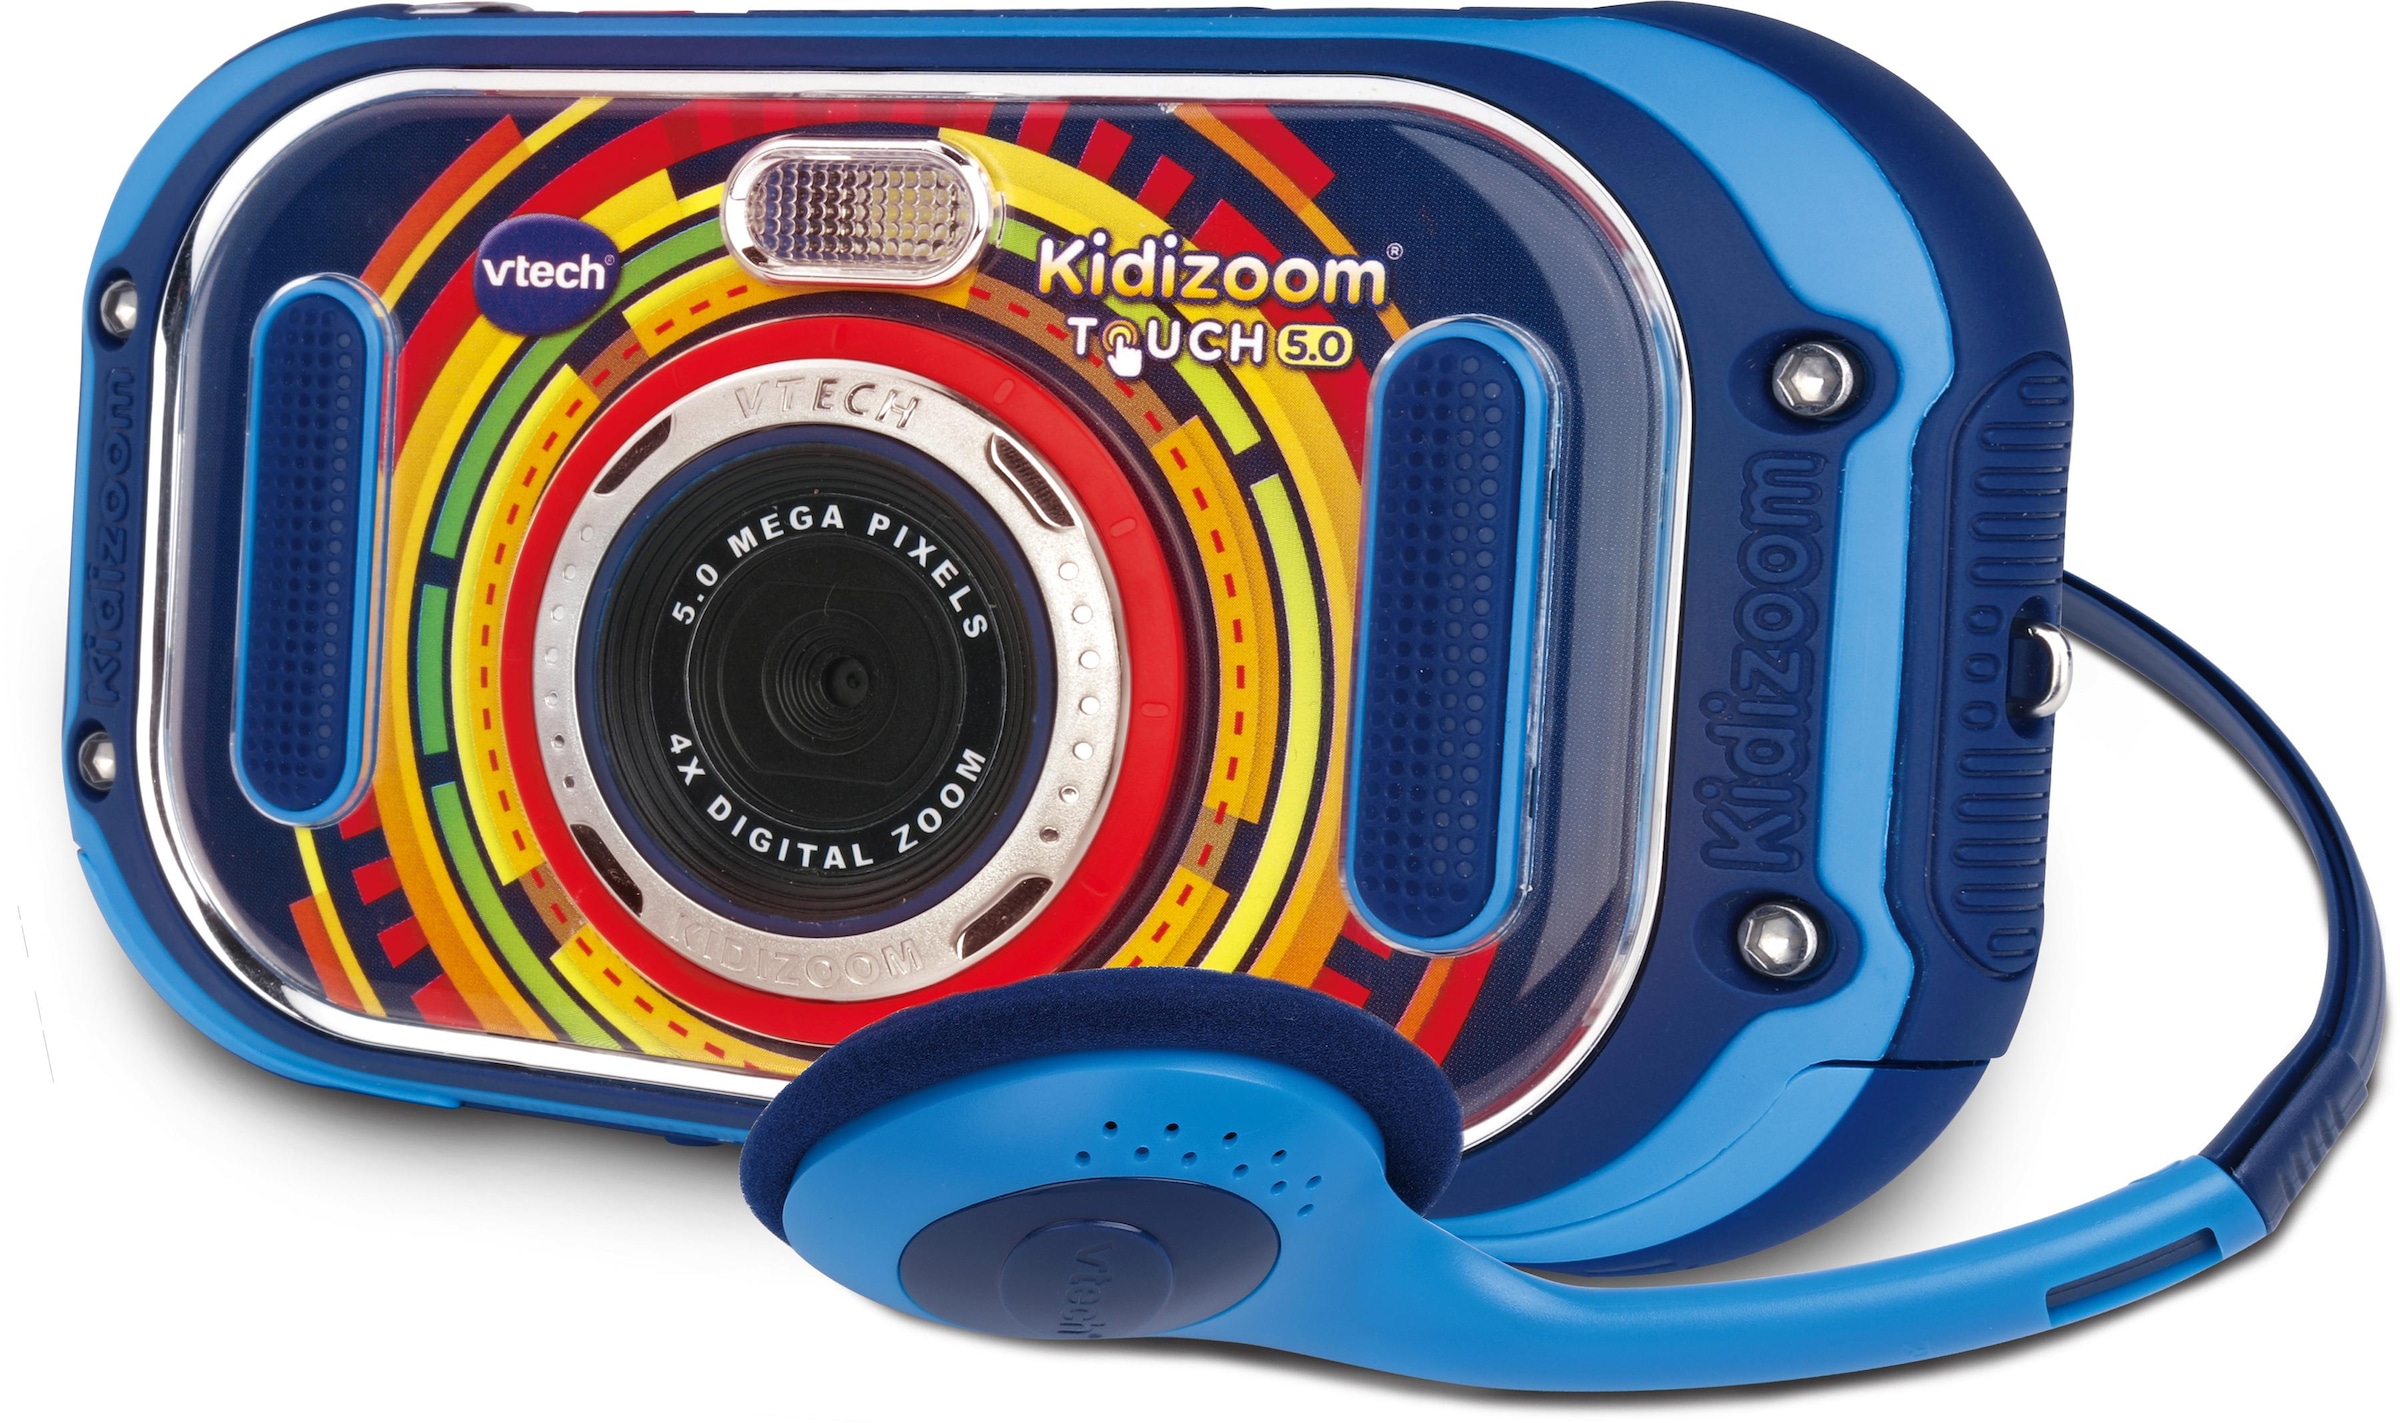 Vtech® Kinderkamera »Kidizoom Touch 5.0«, 5 MP, mit Musik